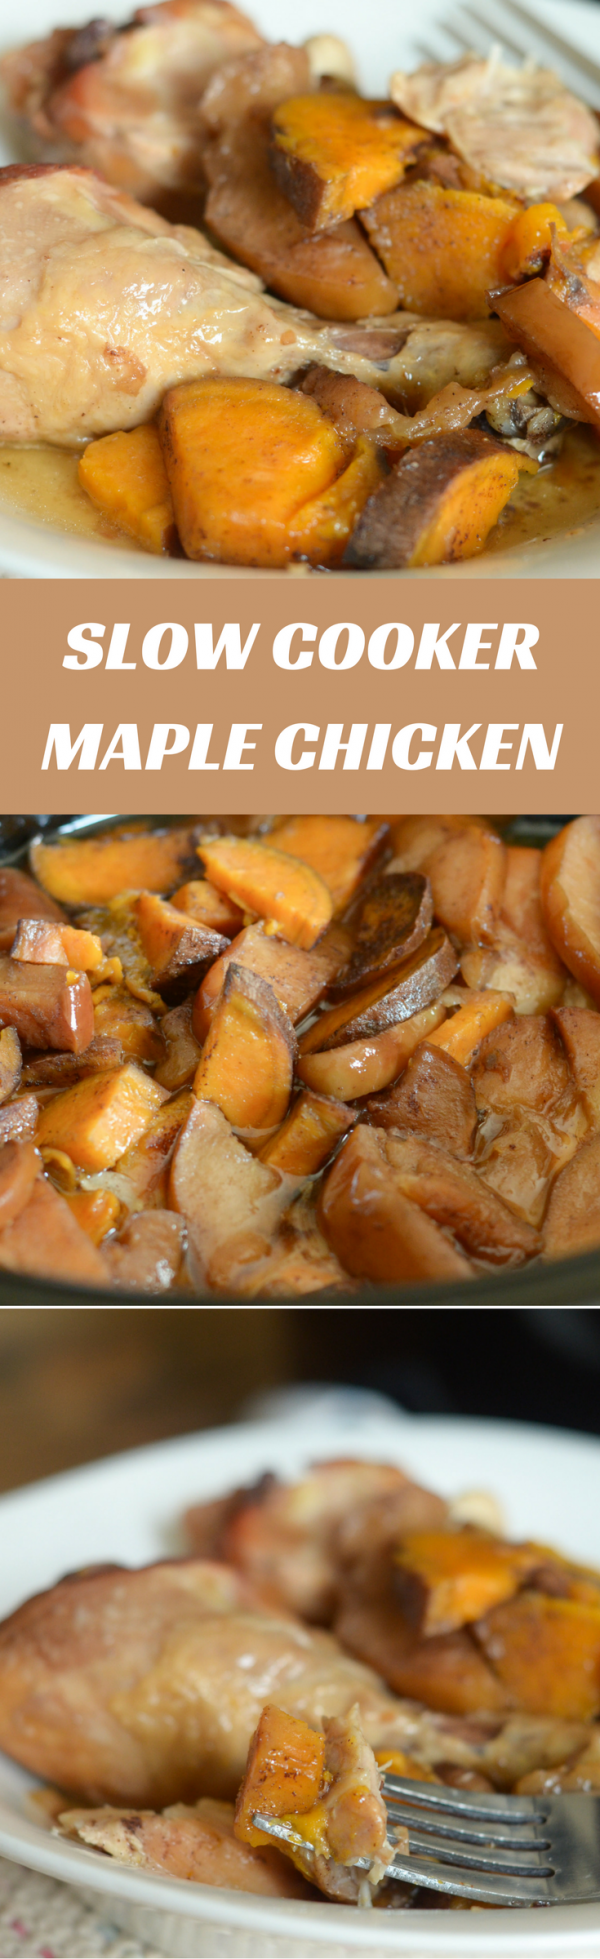 Slow Cooker Maple Chicken